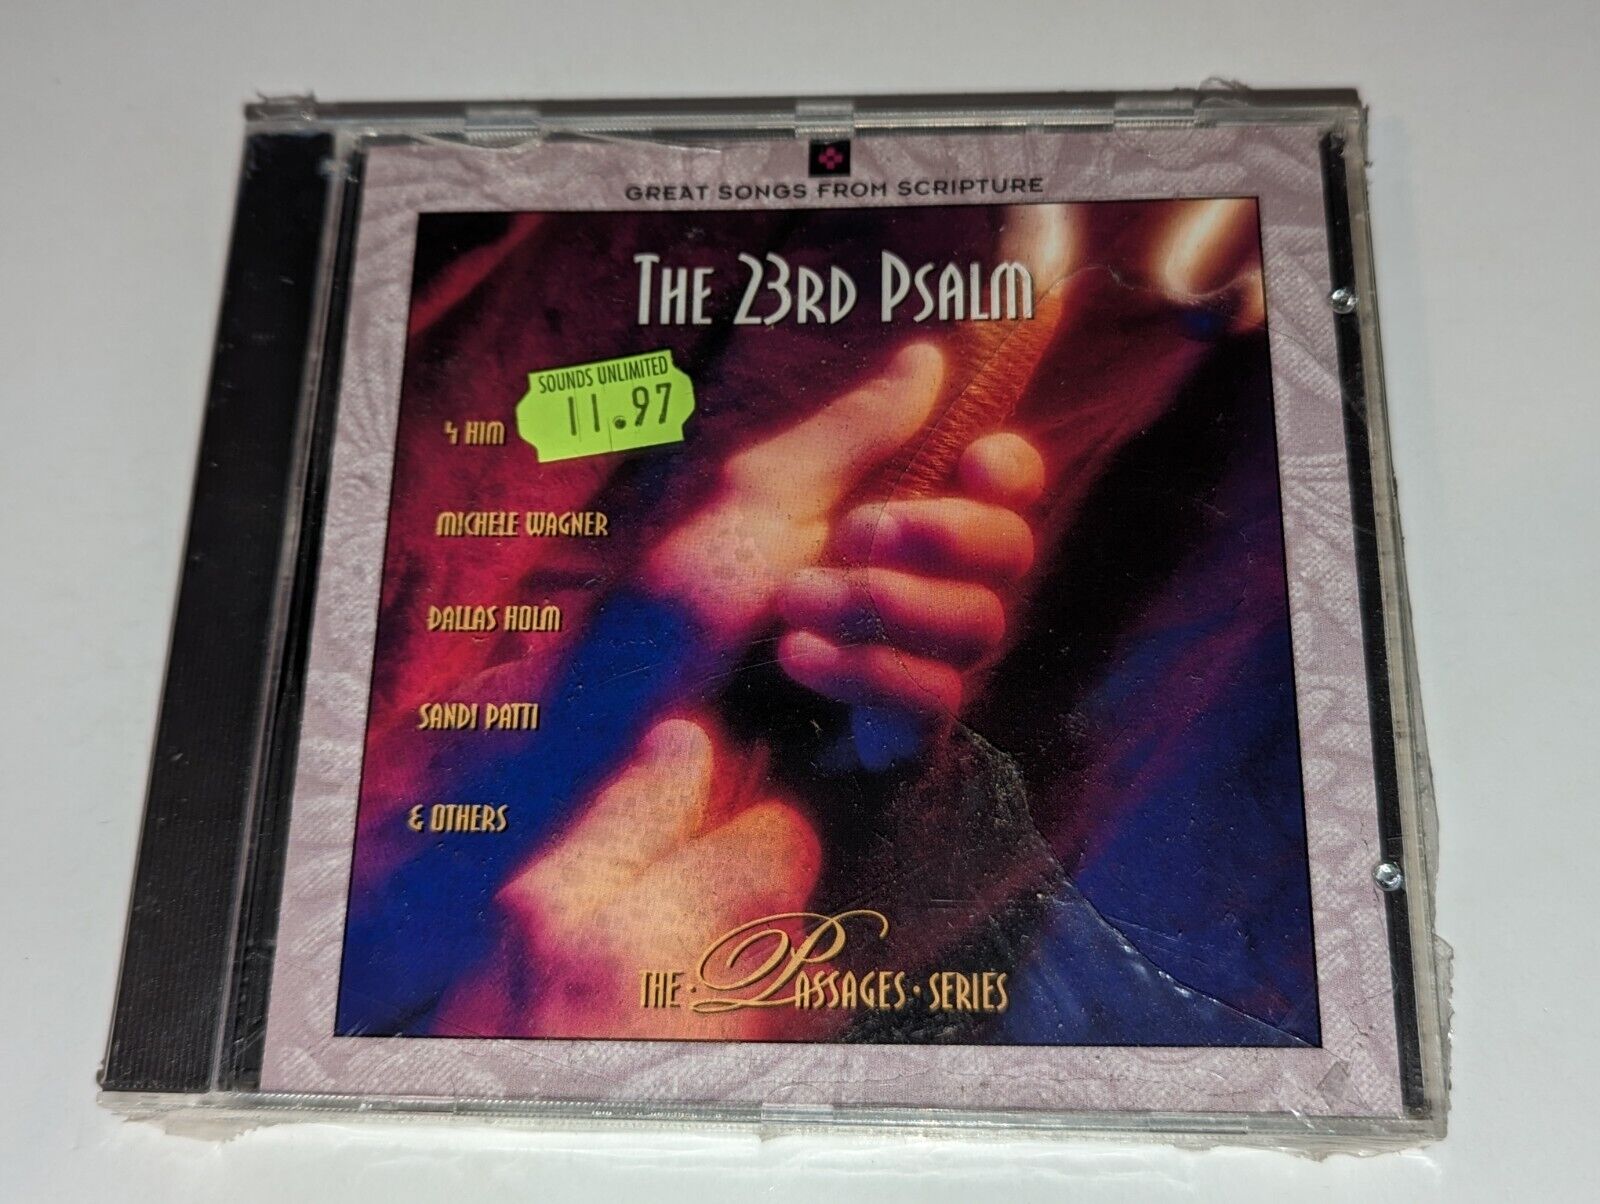 *NEW/SEALED* The 23rd Psalm CD The Passage Series 4Him/Sandi Patti 1993 Benson